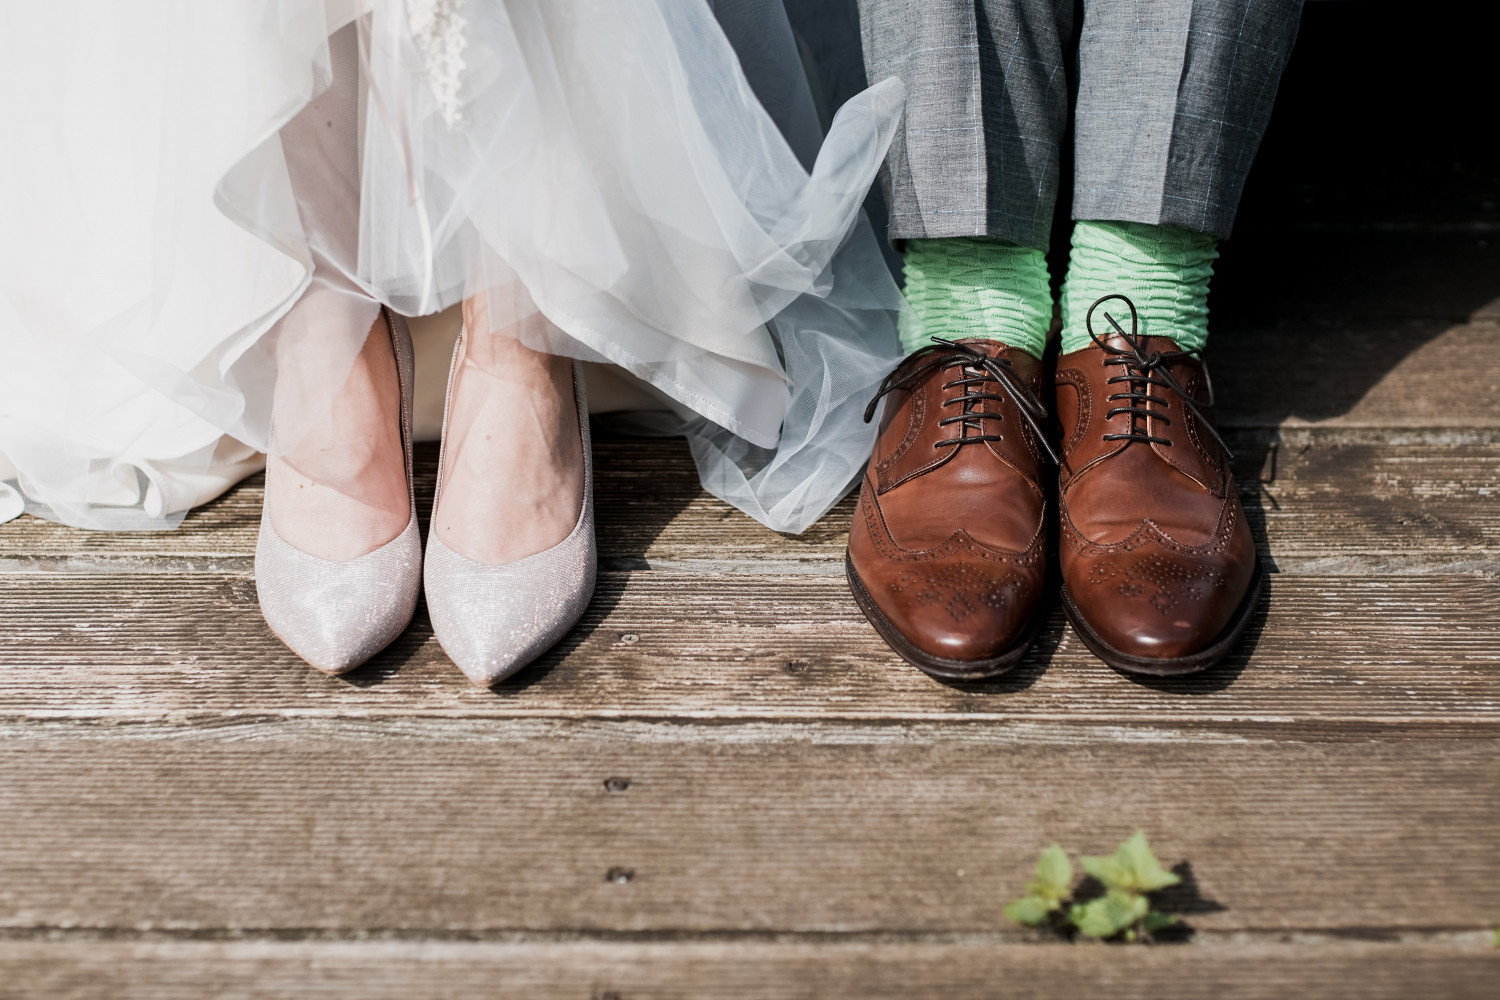 Feet of bride and groom on wooden floor